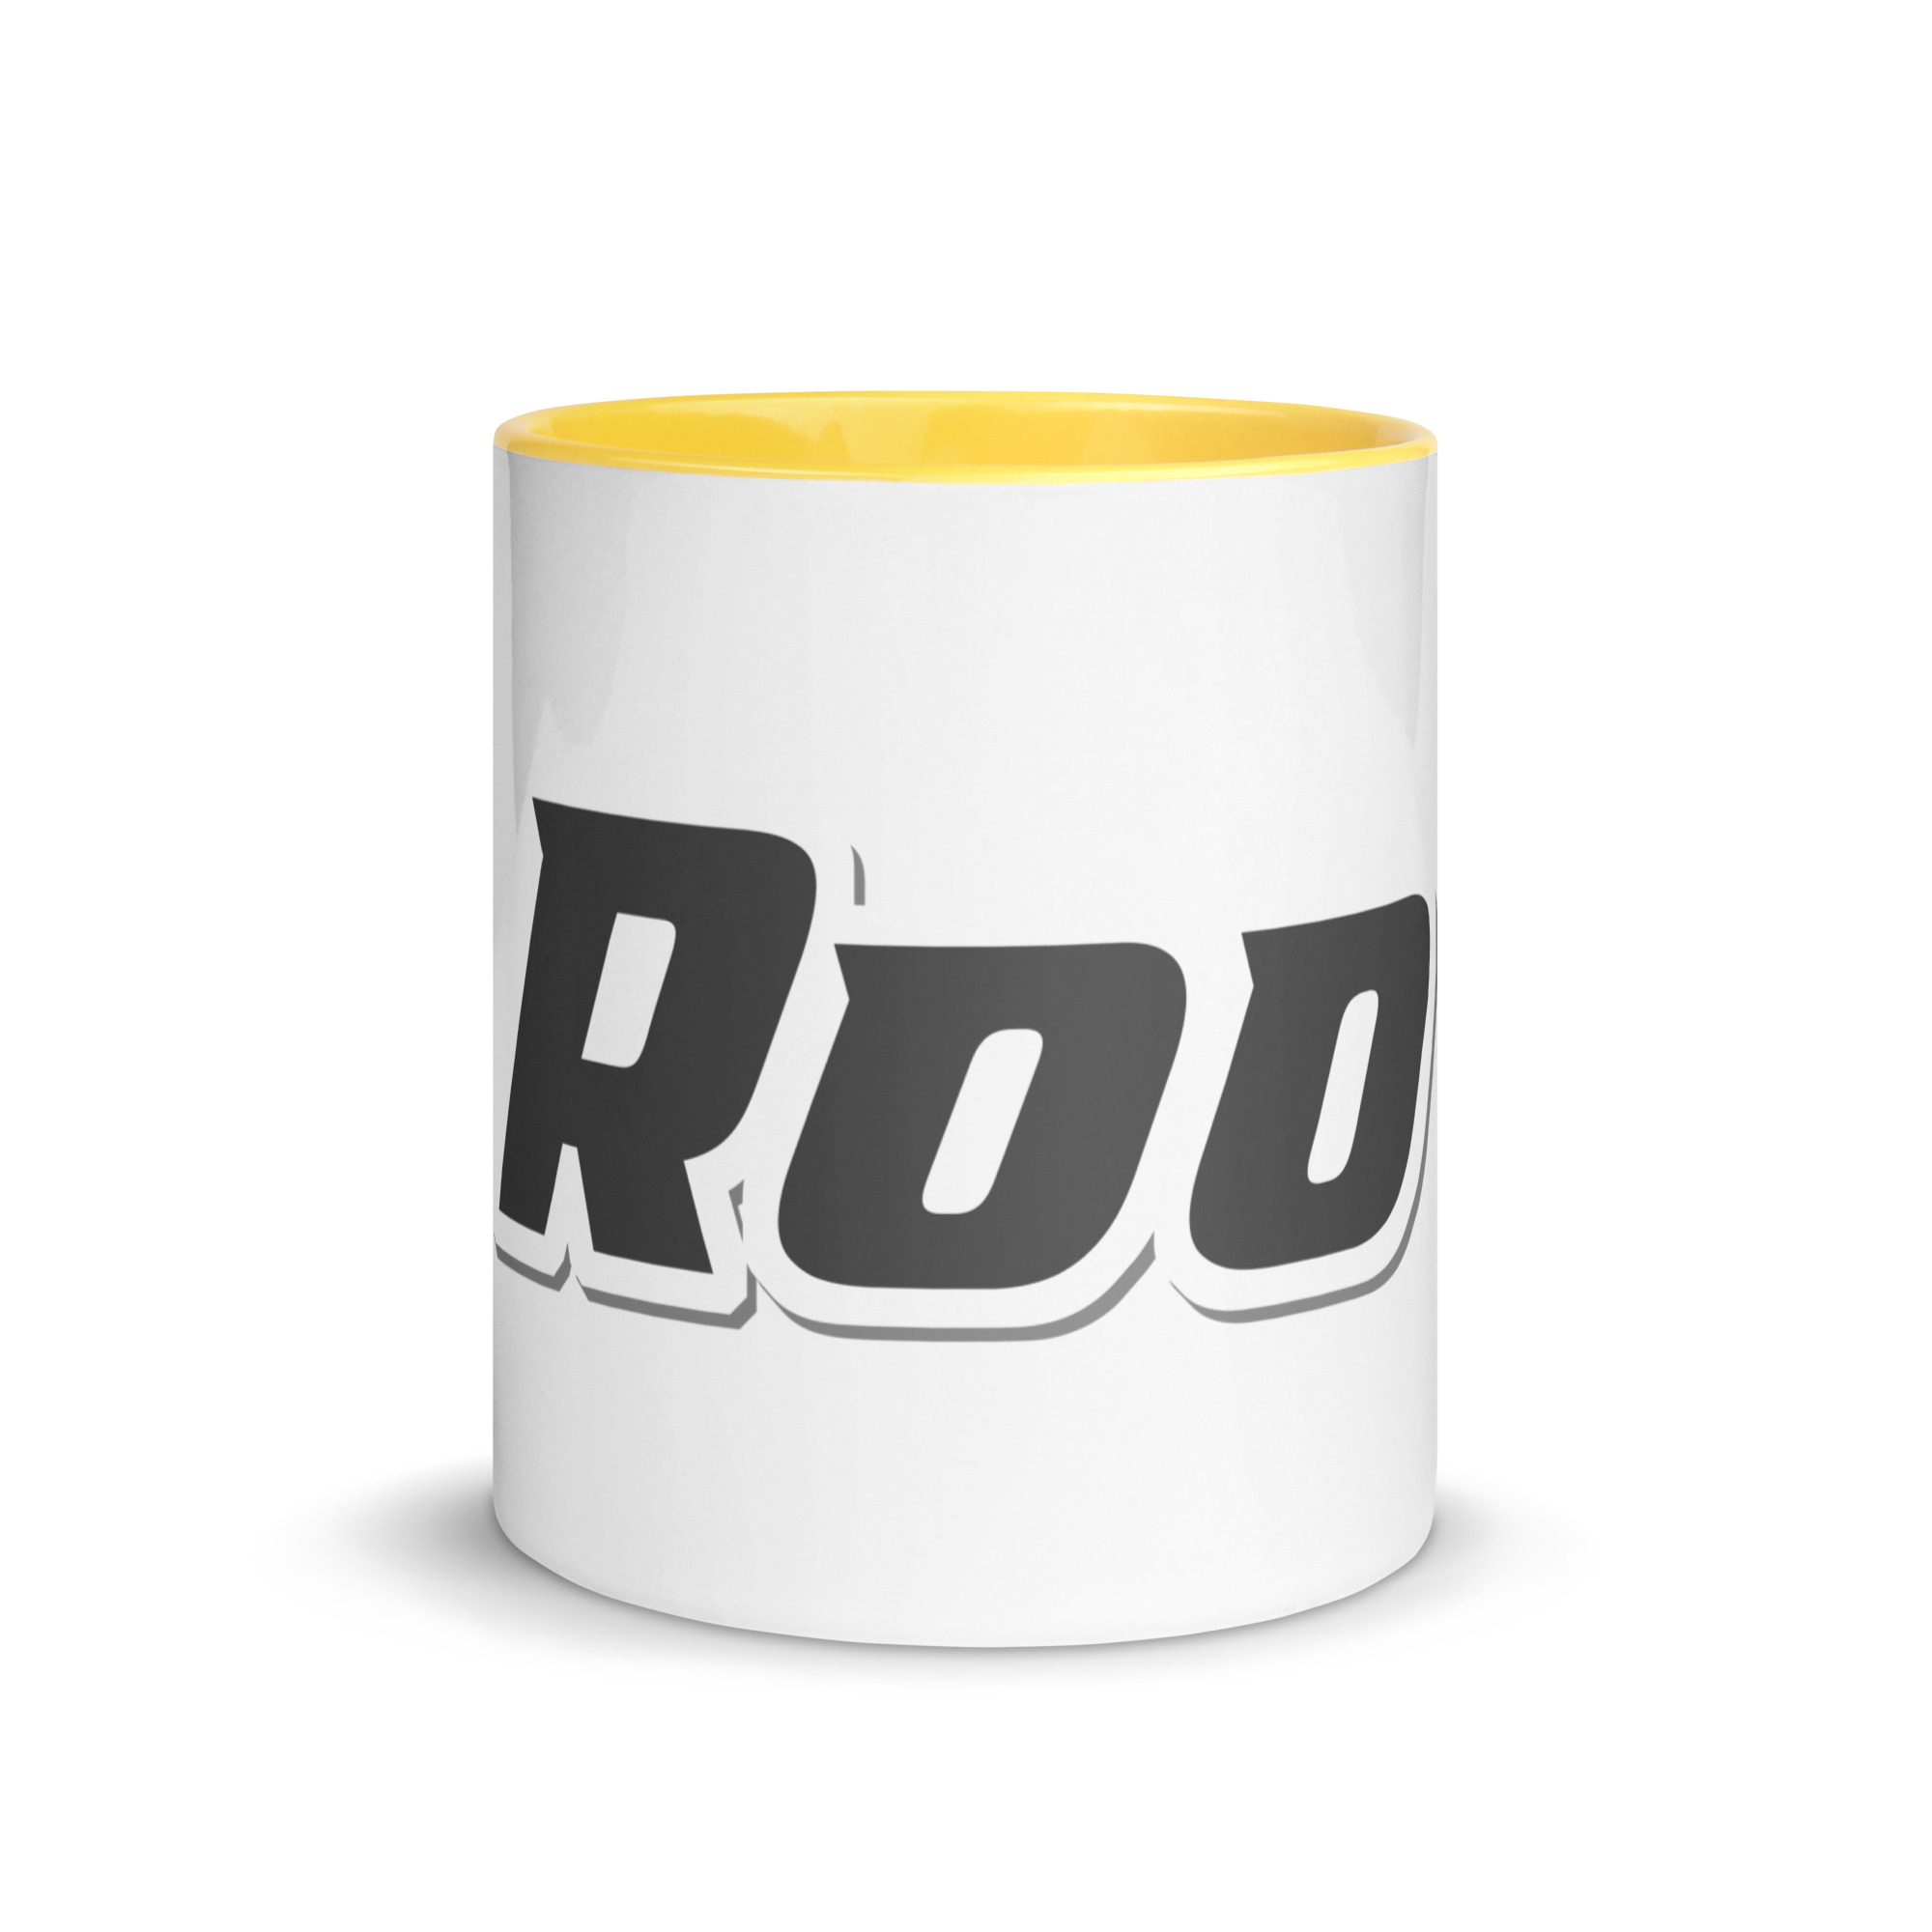 white-ceramic-mug-with-color-inside-yellow-11-oz-front-6525b50607bf0.jpg